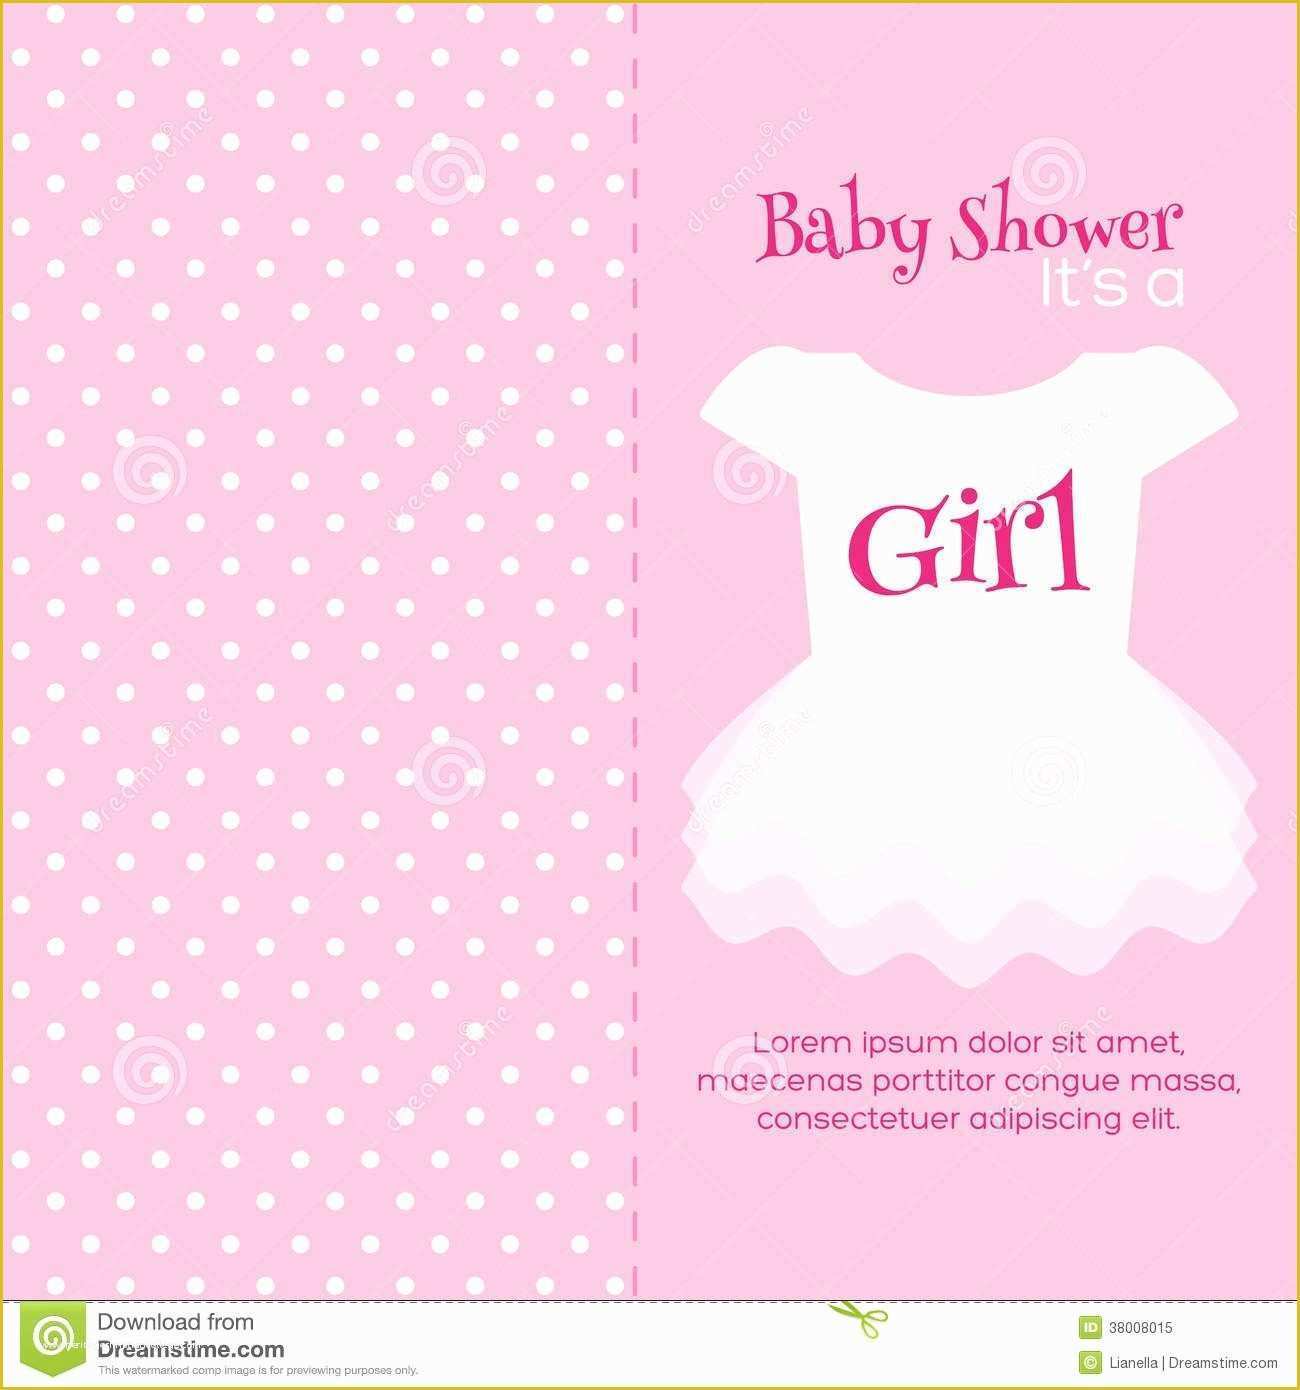 Free Baby Shower Invitation Templates Microsoft Word Of Inspirational Wedding Shower Invitation Template Microsoft